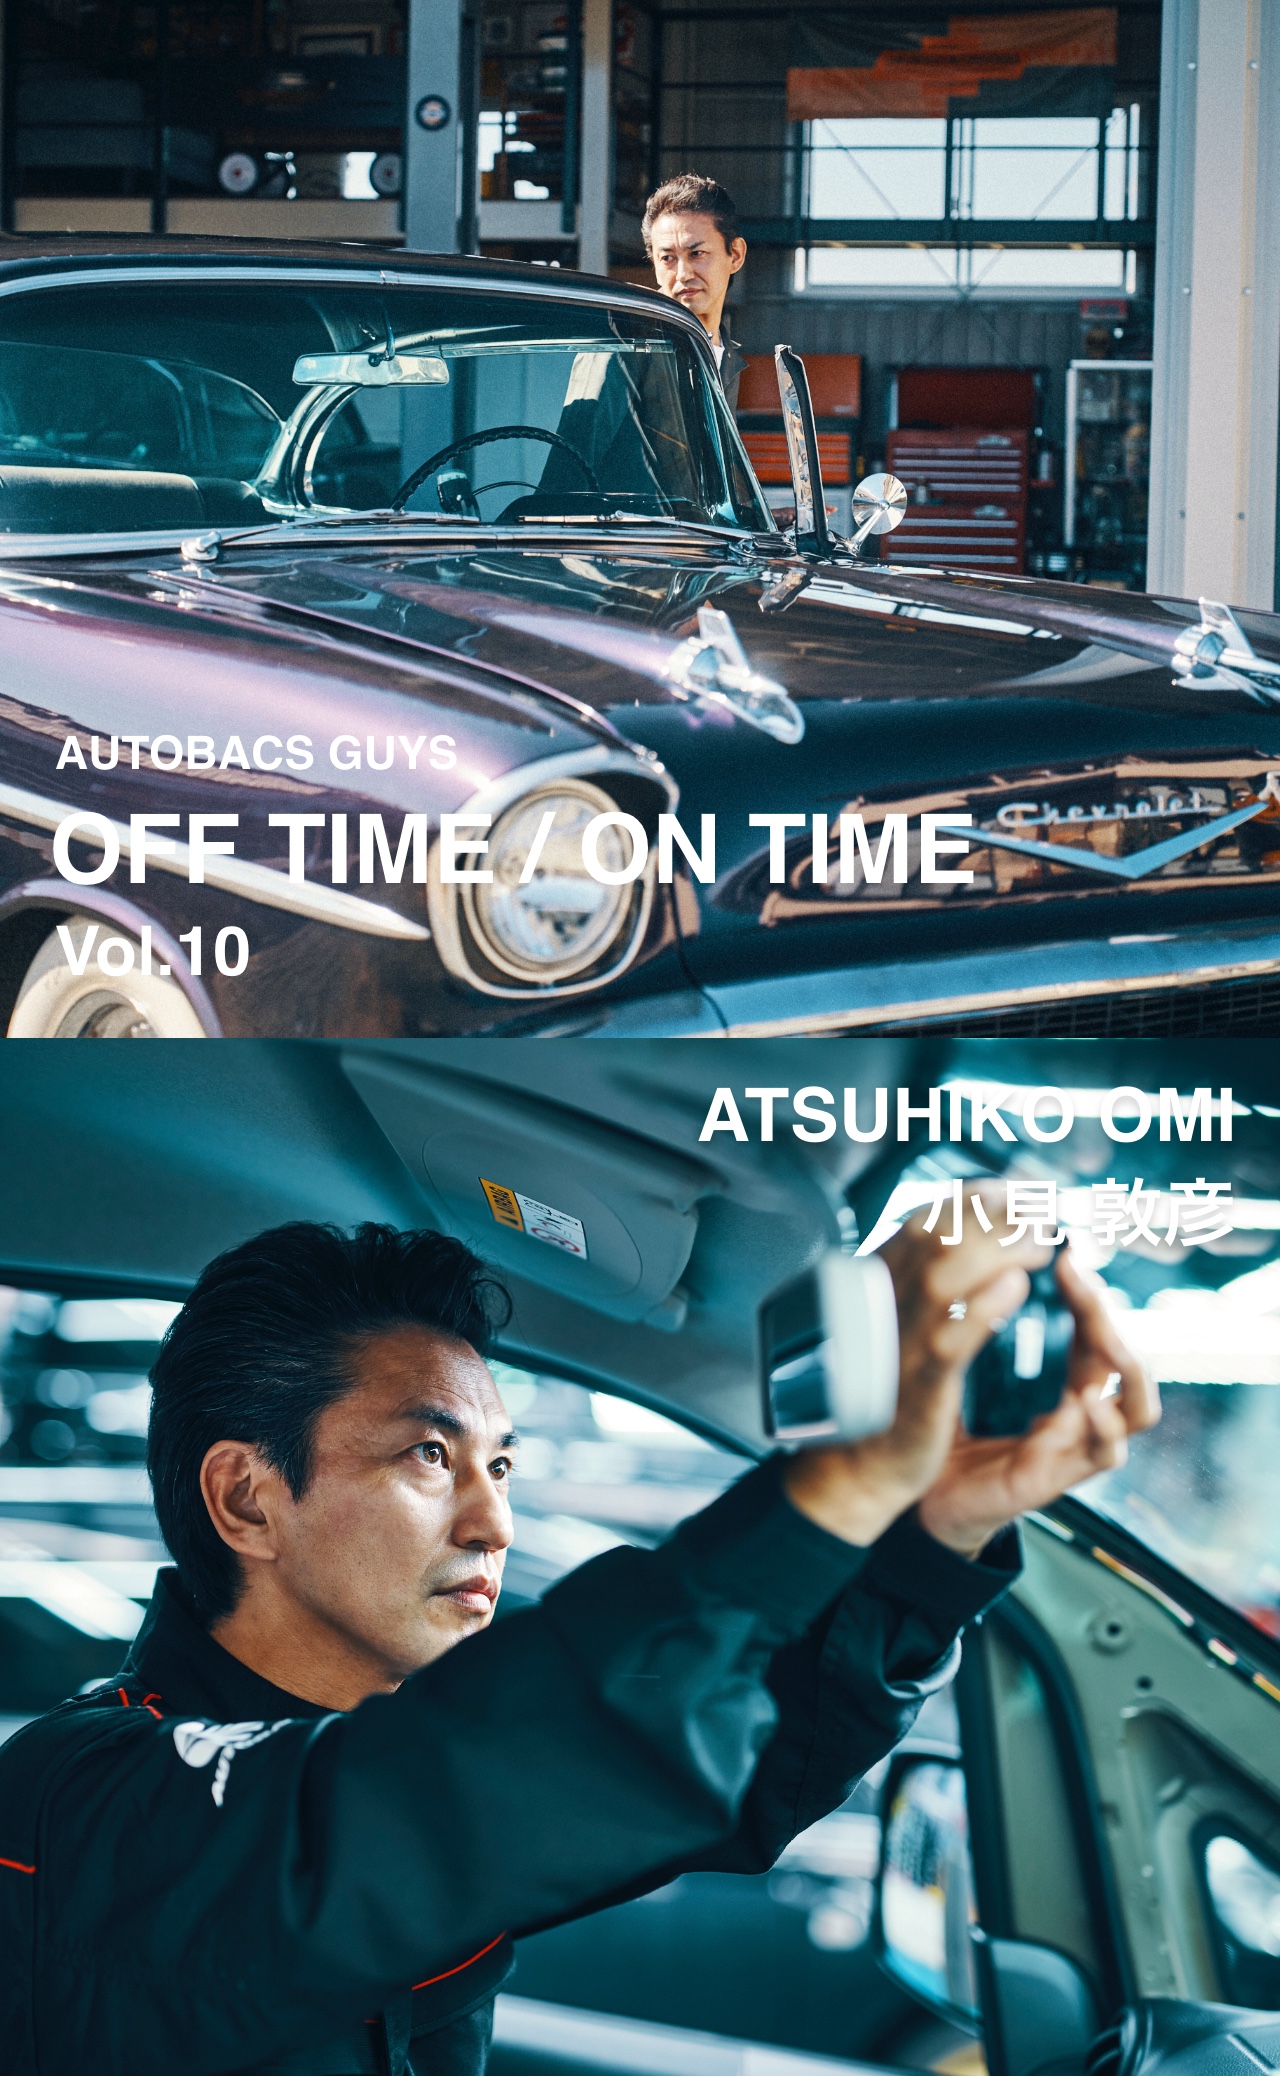 AUTOBACS GUYS OFF TIME / ON TIME オートバックスガイズの裏側　Vol.10 : 小見 敦彦 ATSUHIKO OMI